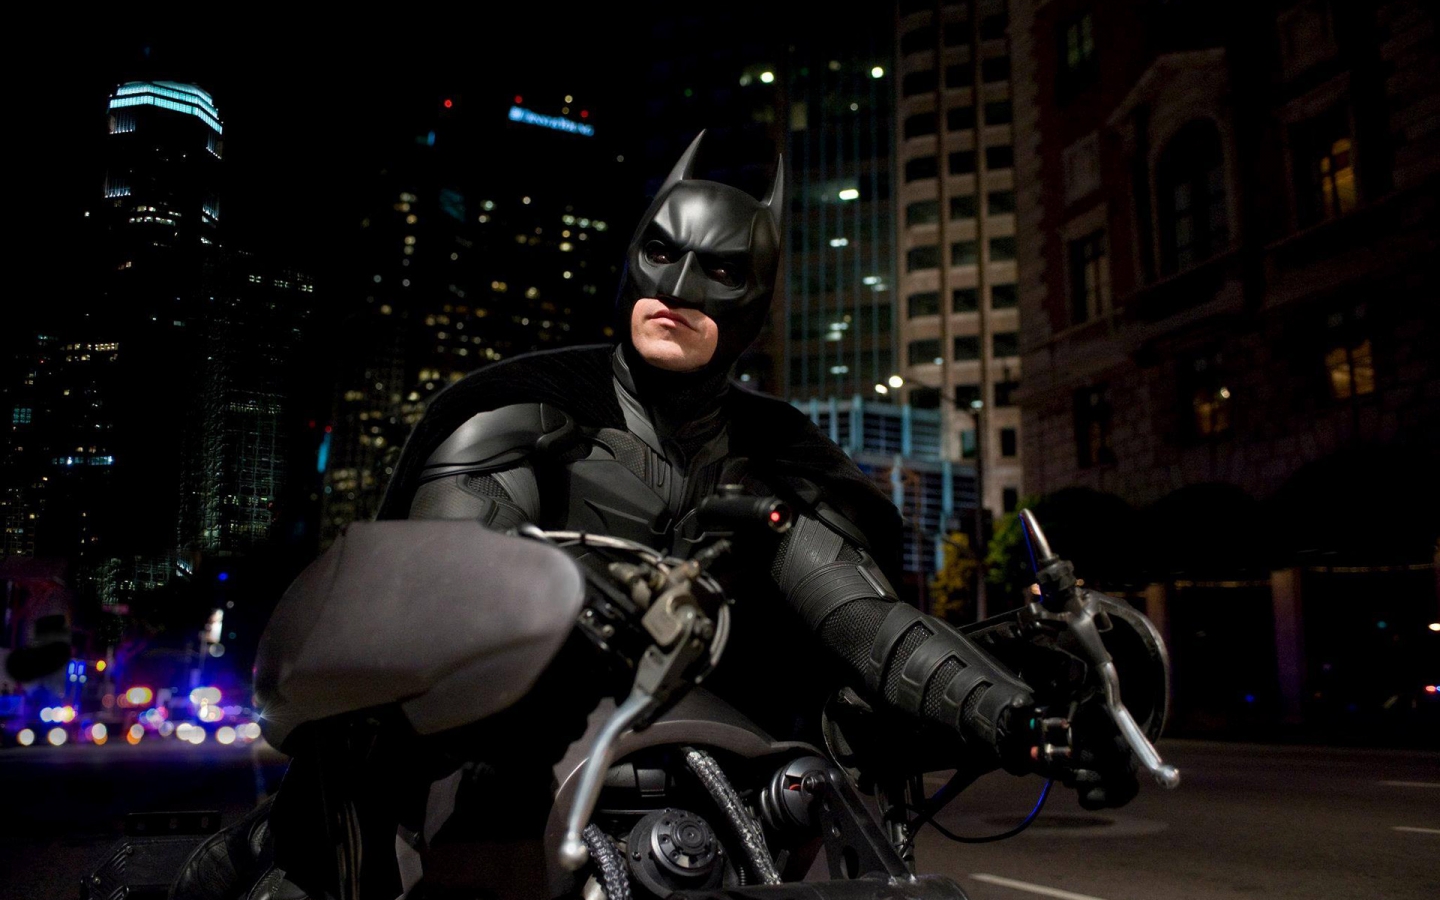 Batman on Bike for 1440 x 900 widescreen resolution